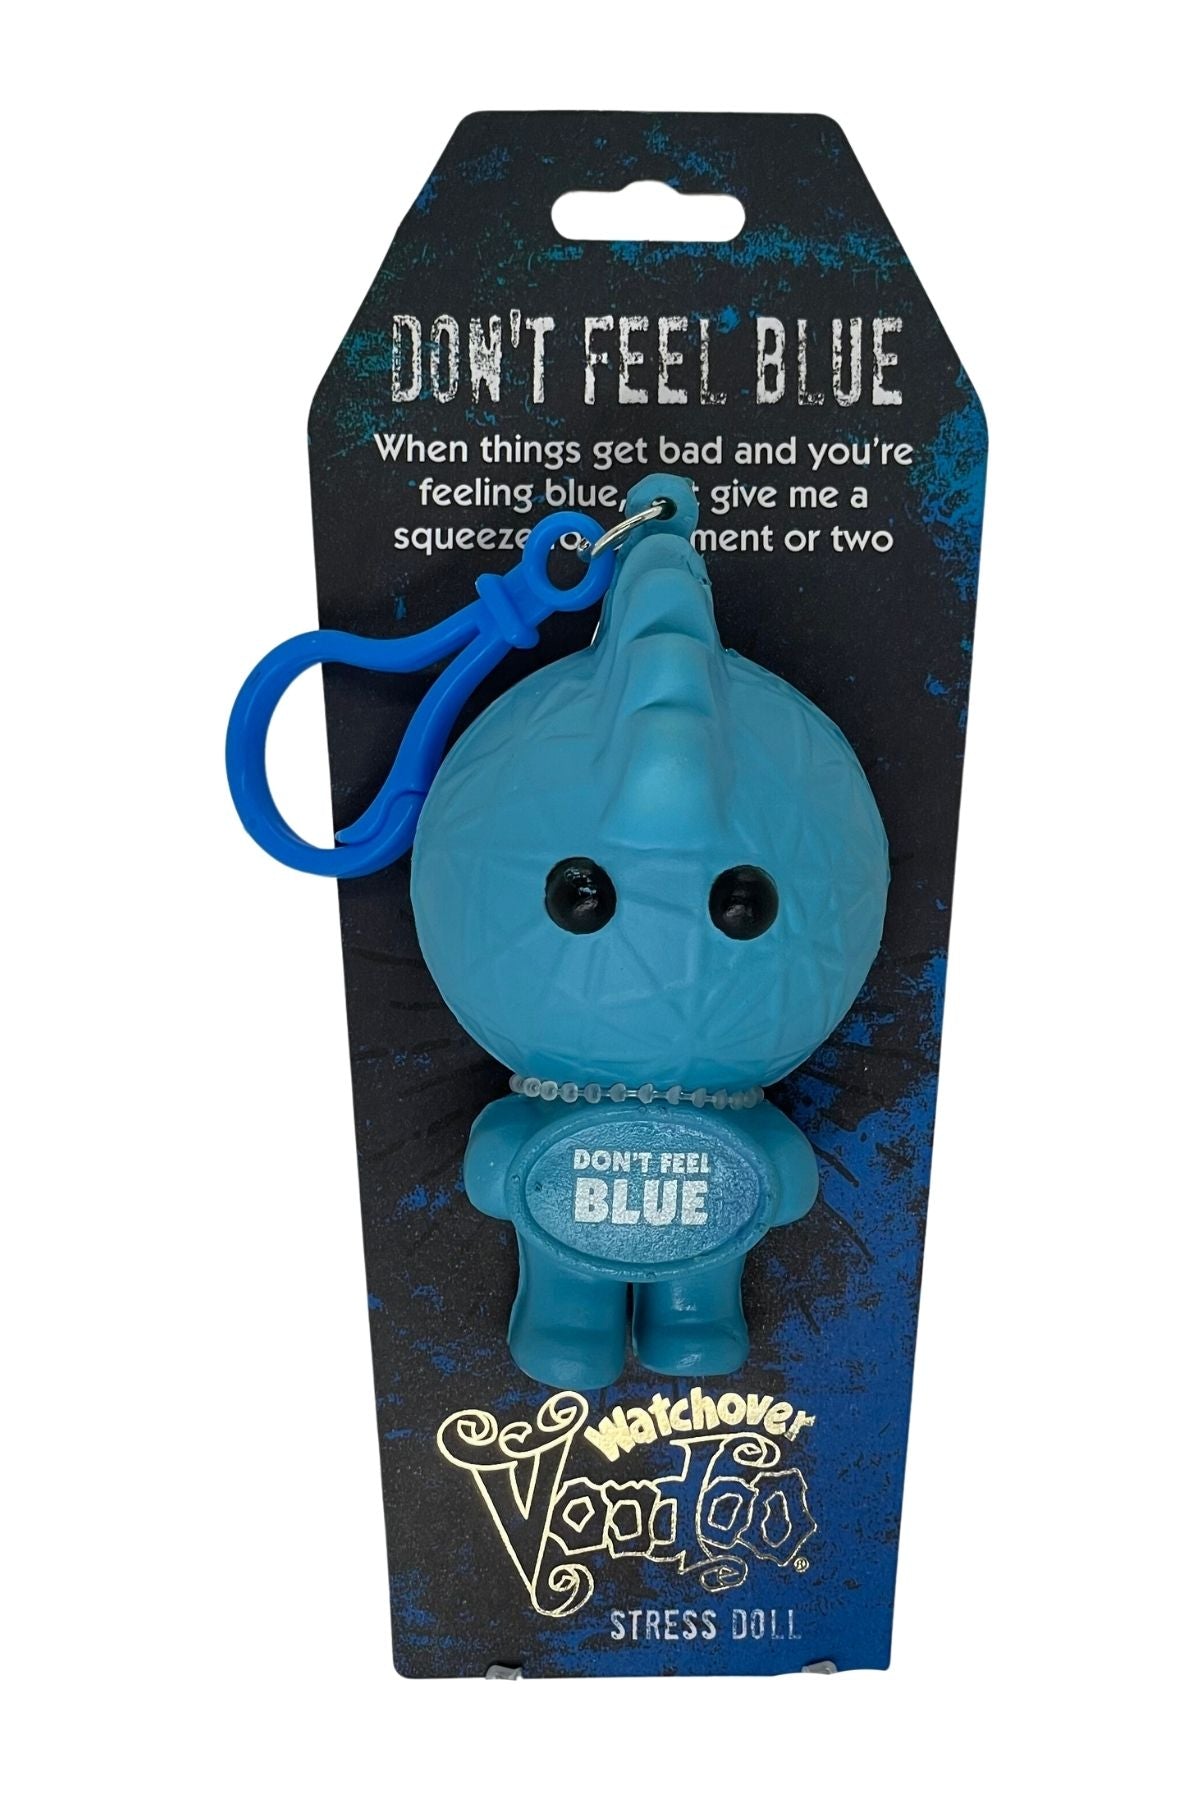 Voodoo Stress Doll -  Don't Feel Blue